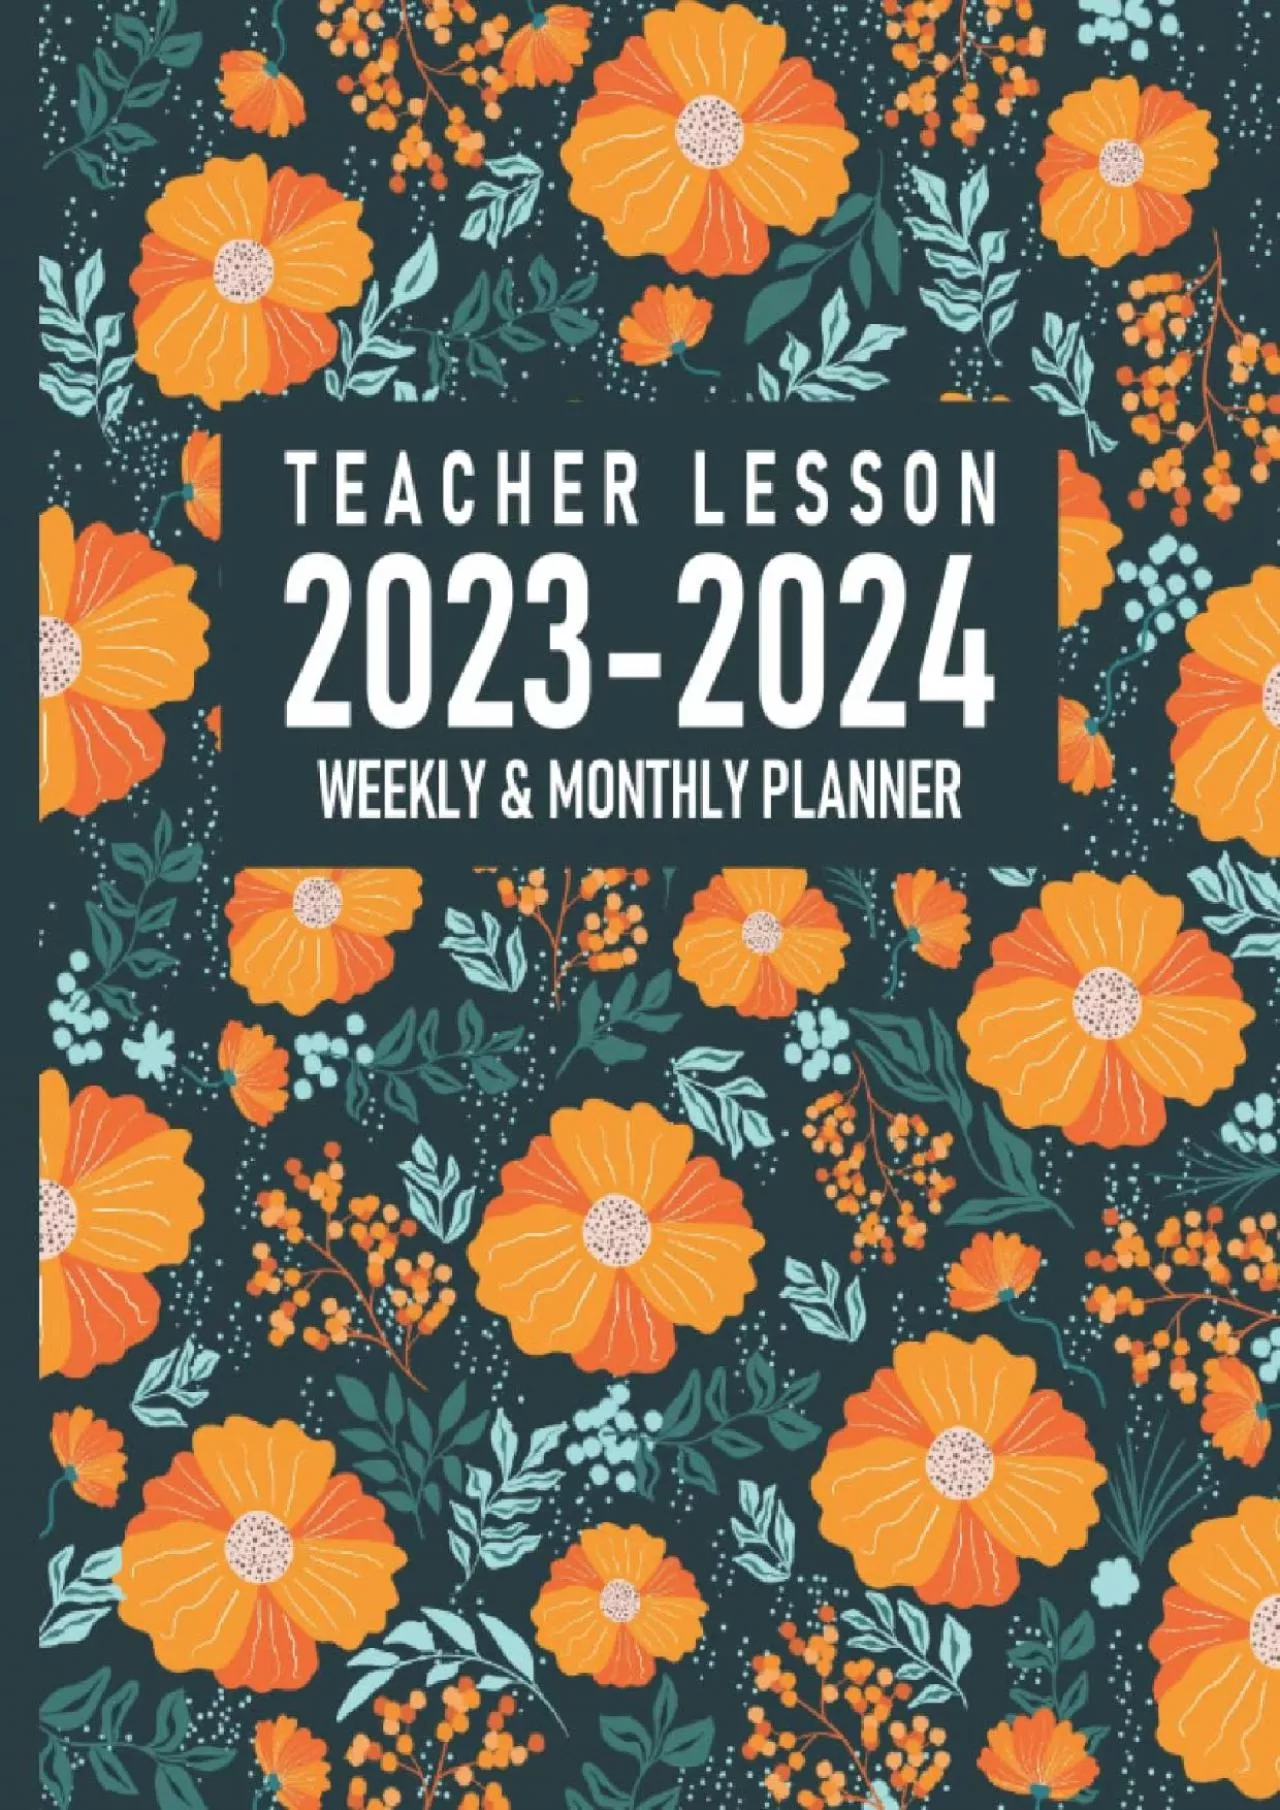 [READ] TEACHER LESSON PLANNER 2023-2024: Lesson Plan Grade and Record Books for Teachers